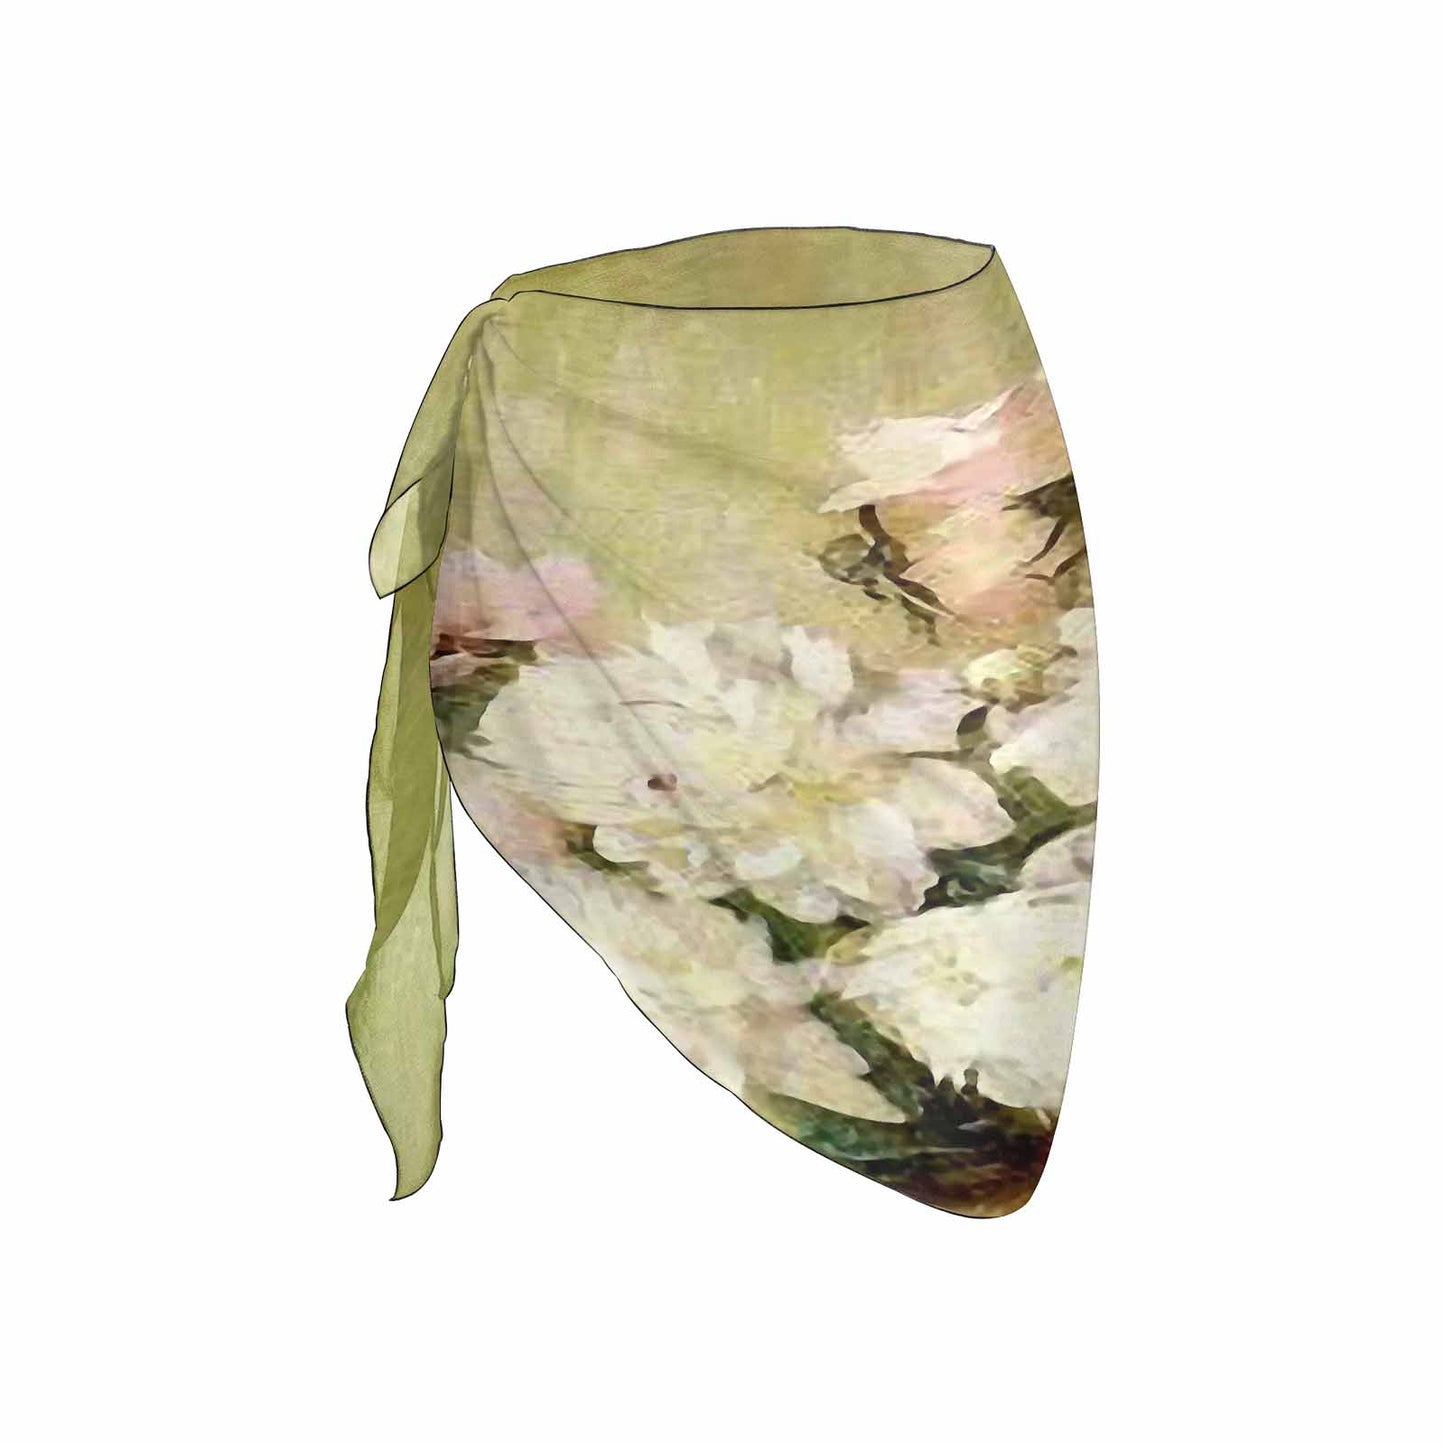 Vintage floral, beach sarong, beach coverup, swim wear, Design 35